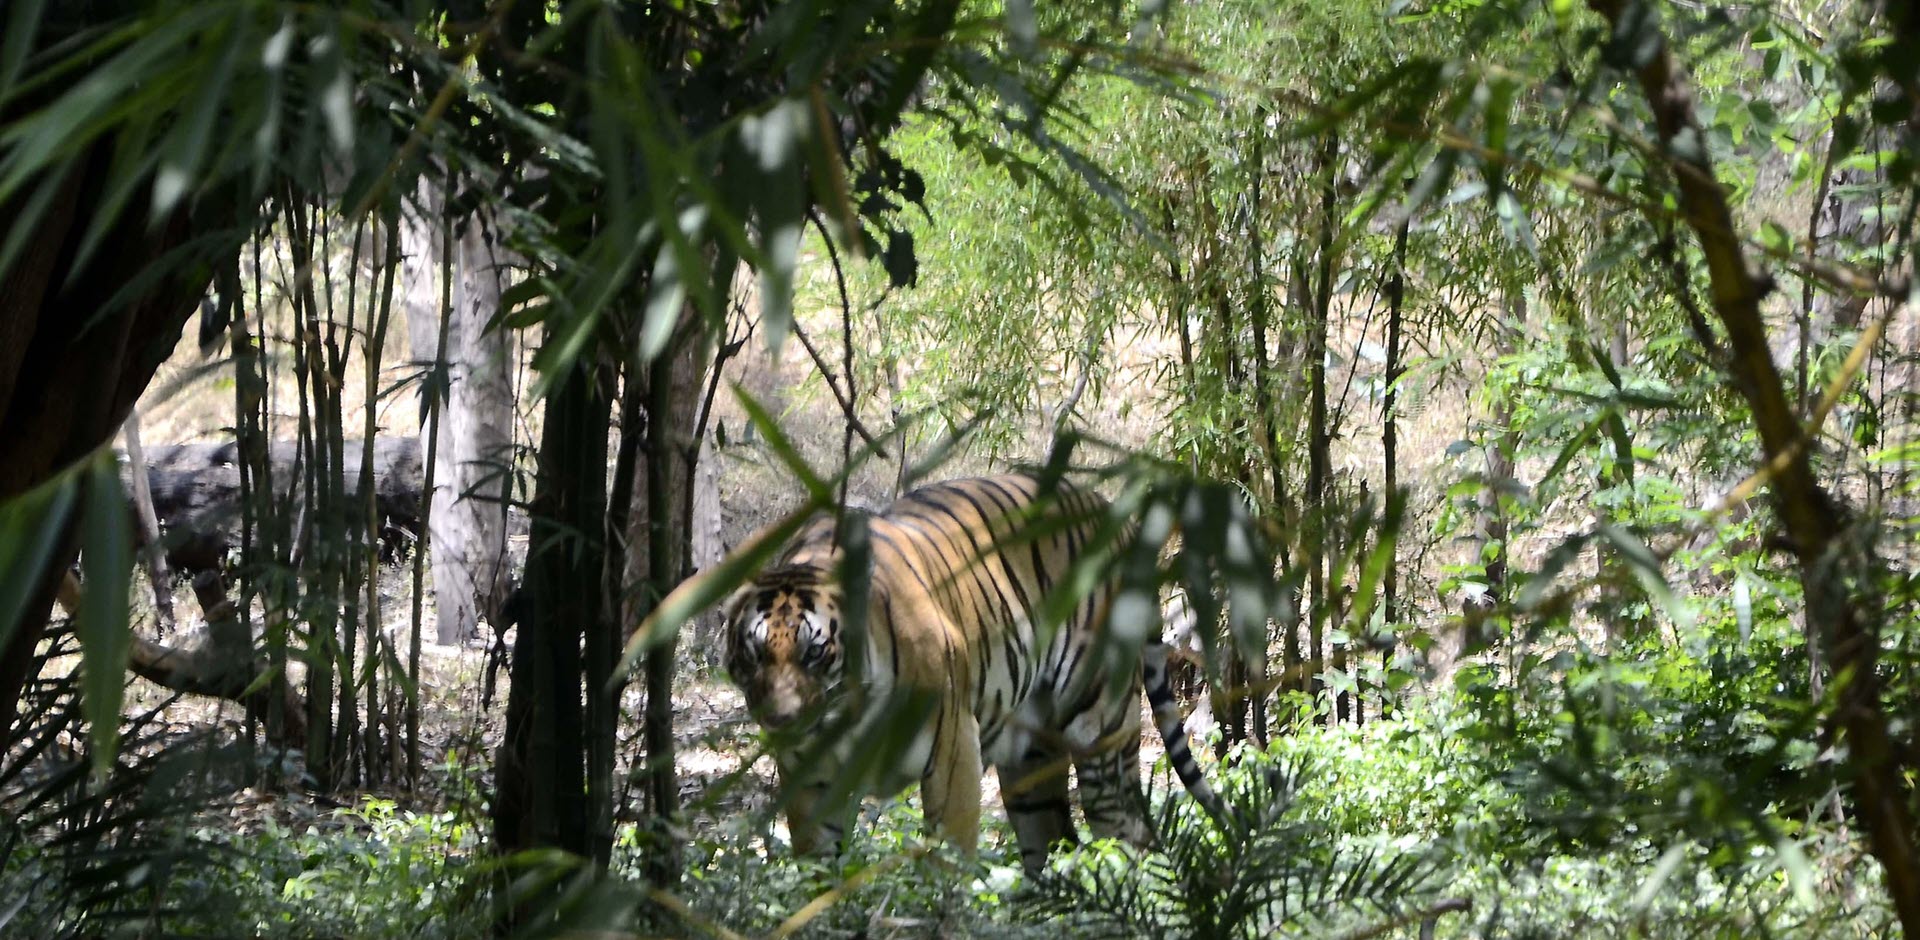 jungle safari odisha